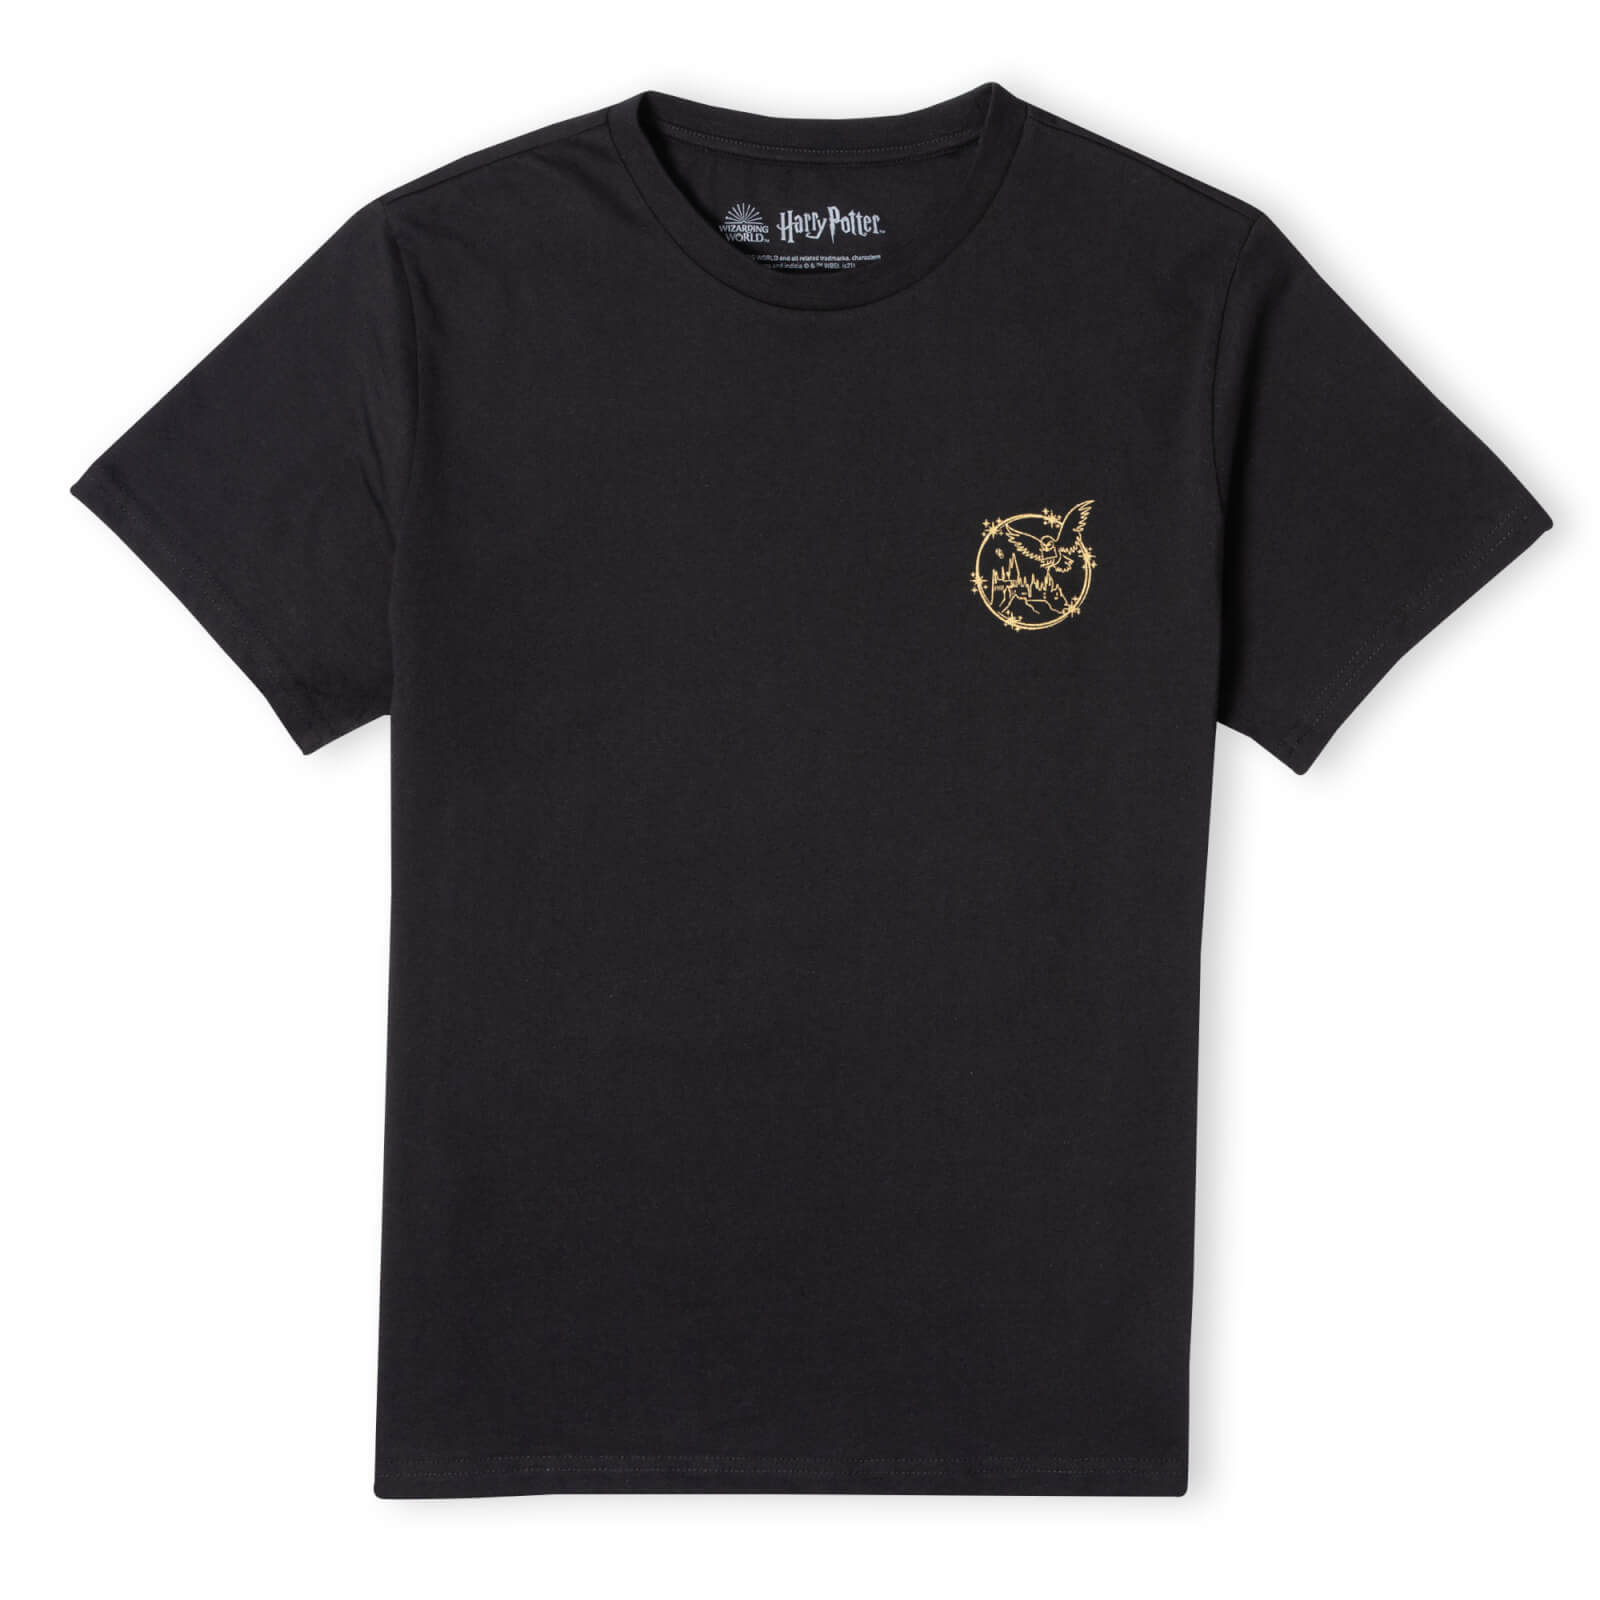 harry potter metallic pocket print women's t-shirt - black - xl